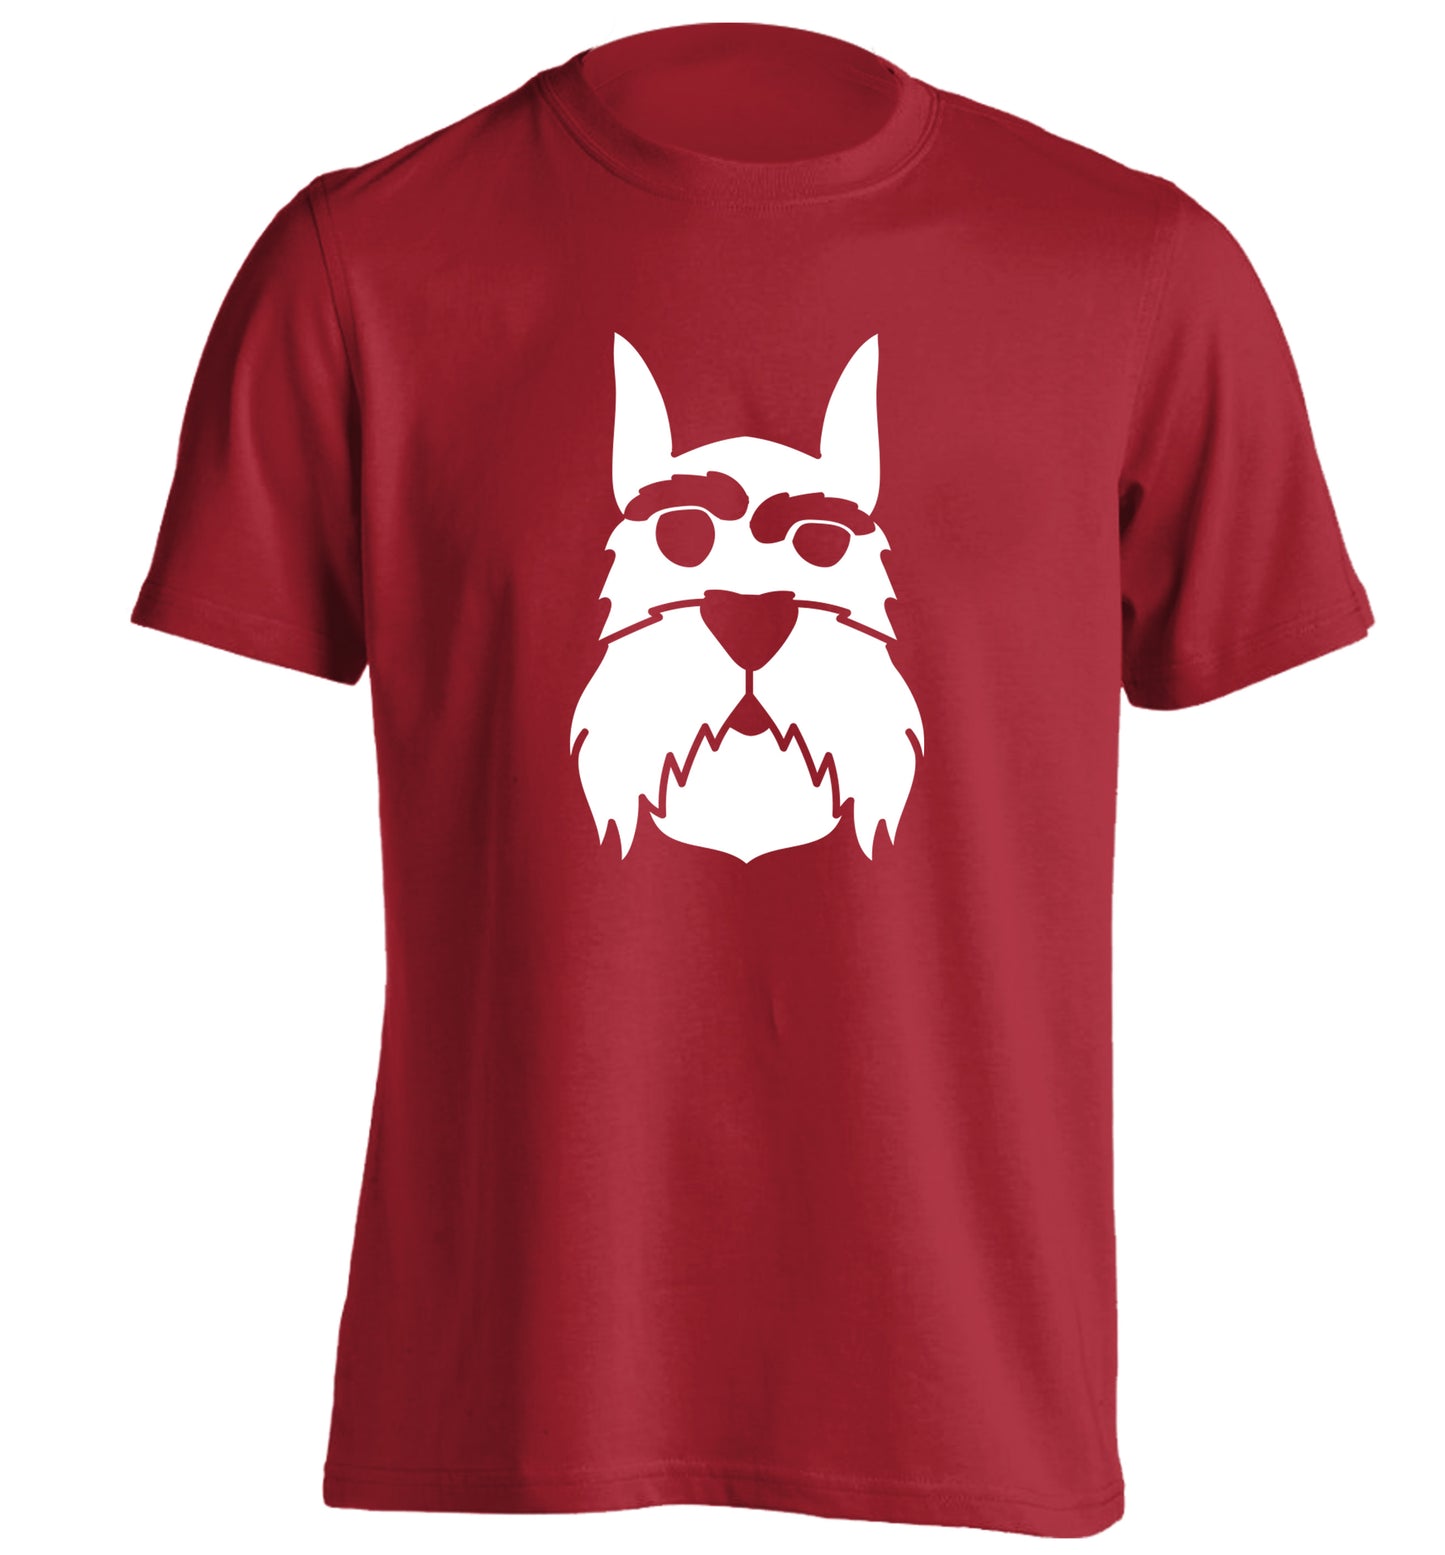 Schnauzer dog illustration adults unisex red Tshirt 2XL